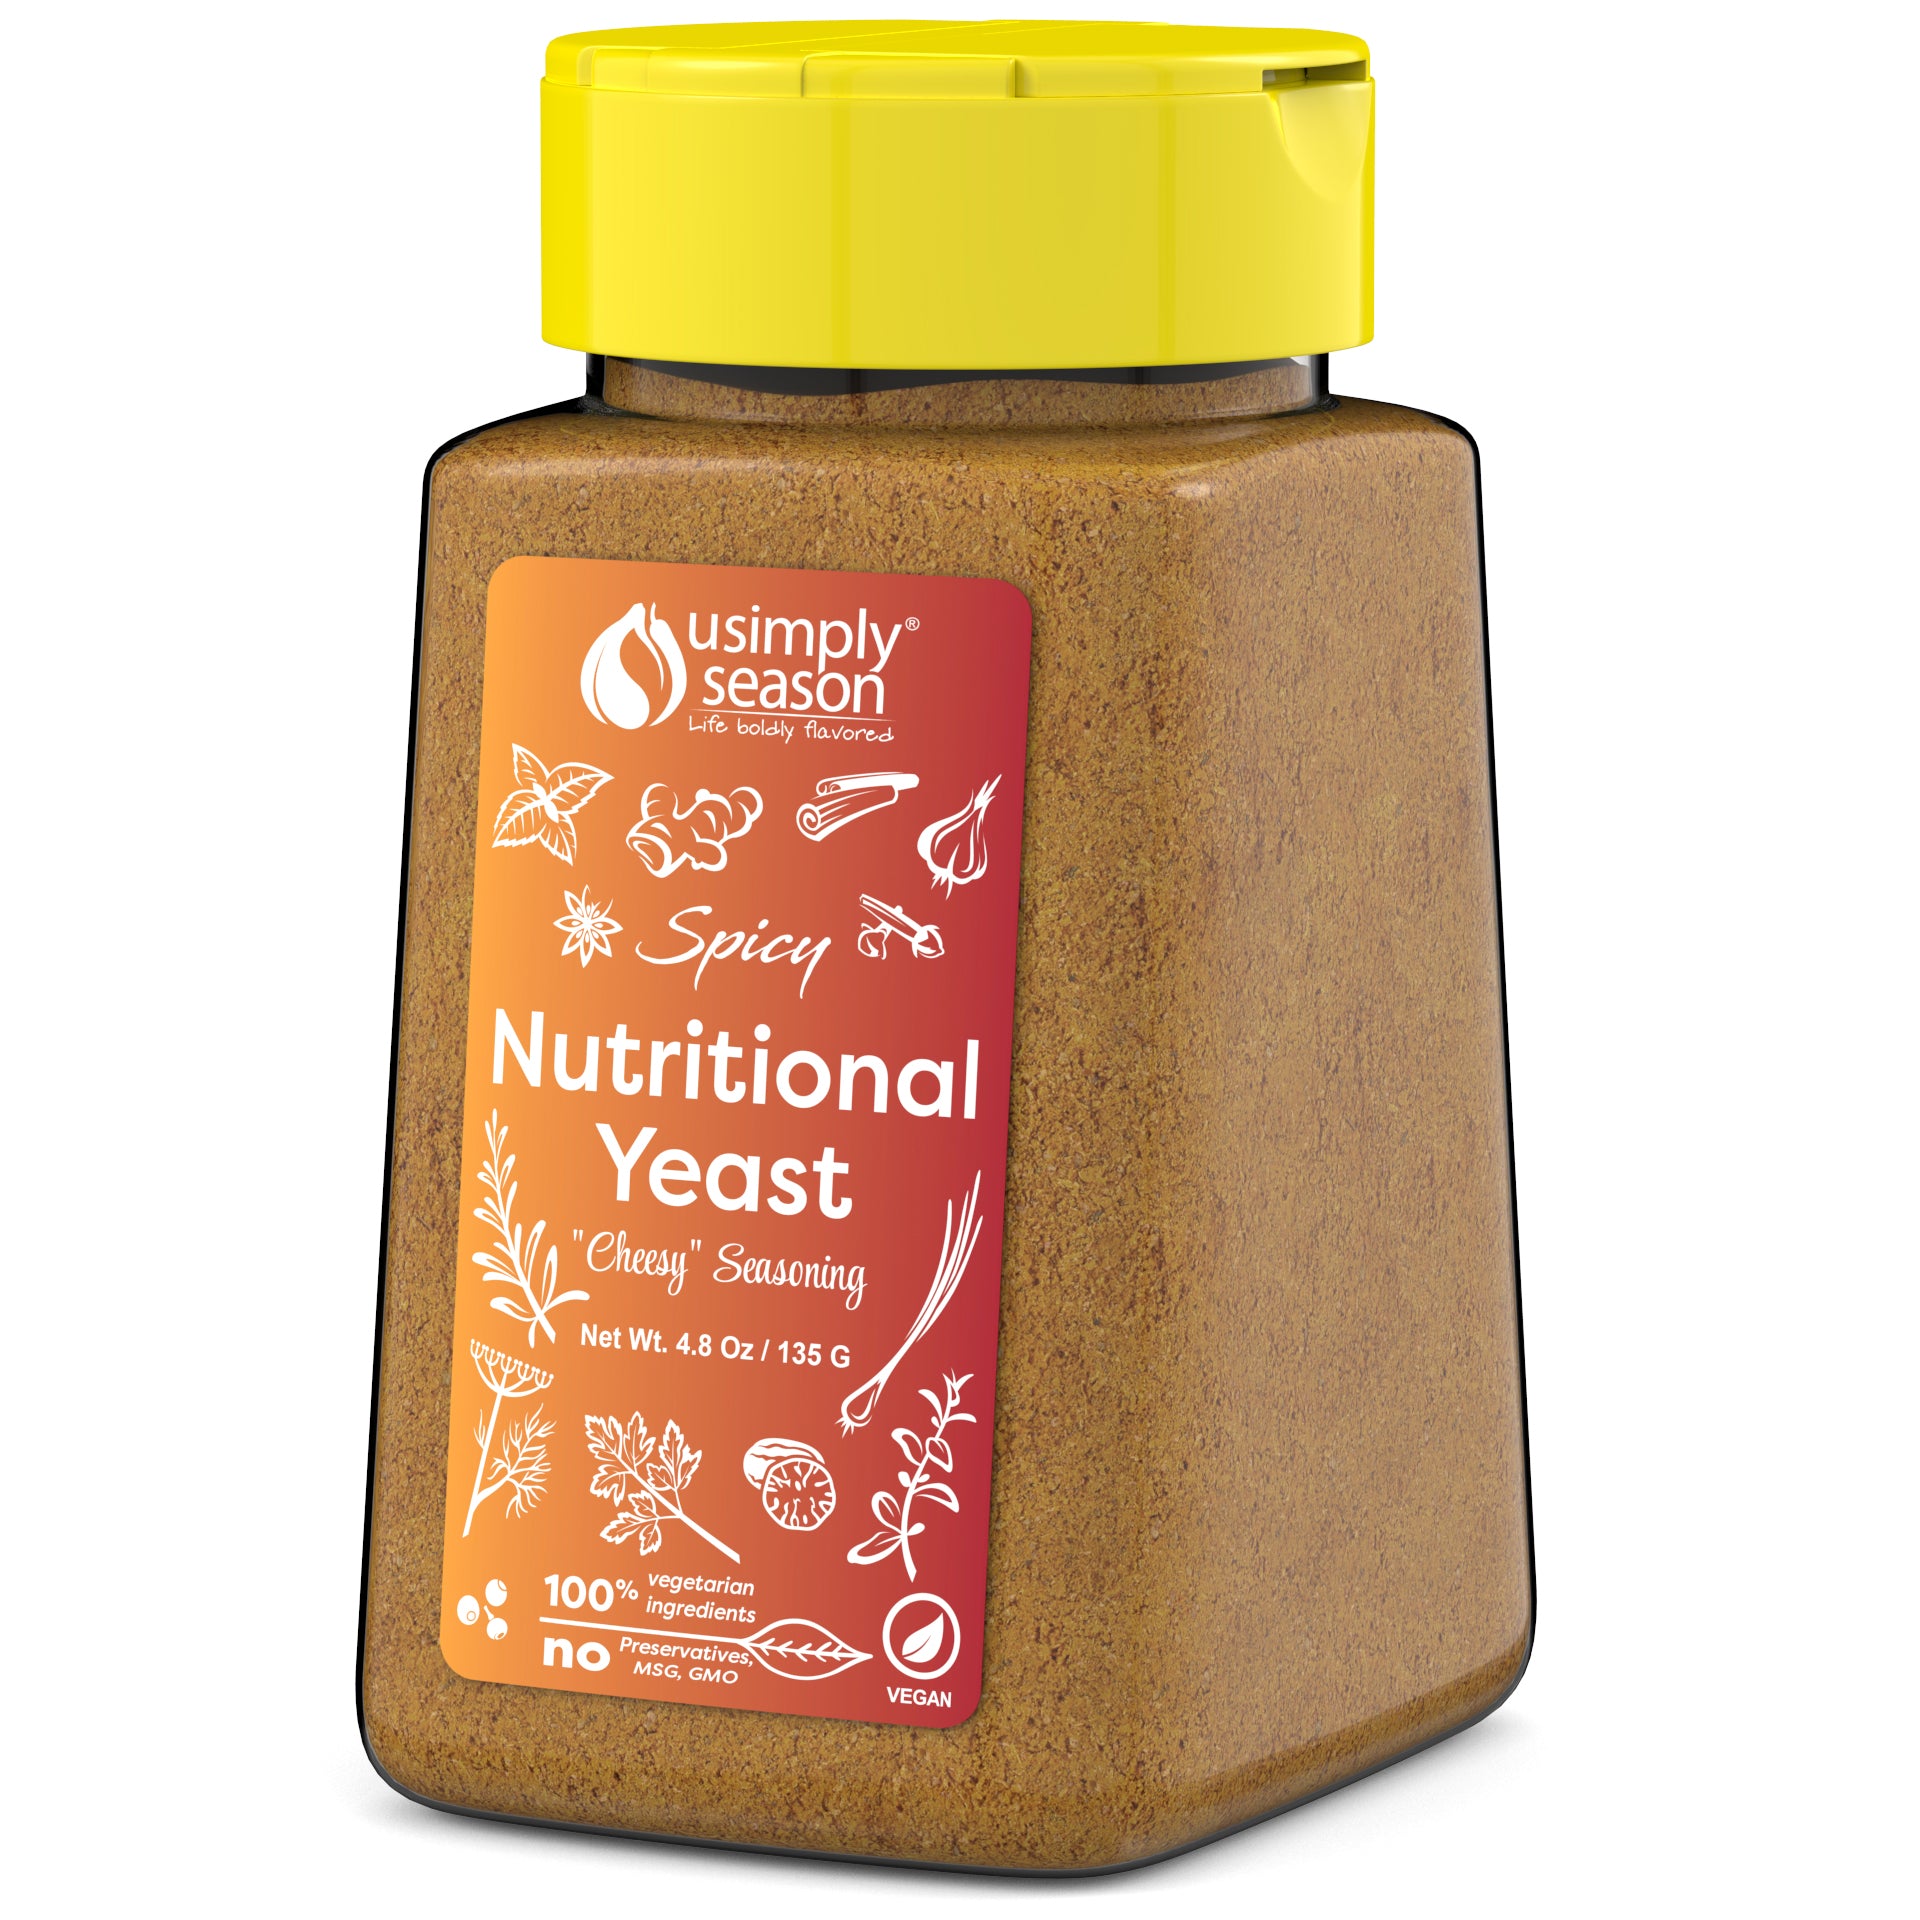 USimplySeason Spicy Nutritional Yeast, 4.8oz - Cheesy Sprinkle | Vegan, Gluten-Free, Rich in Flavor